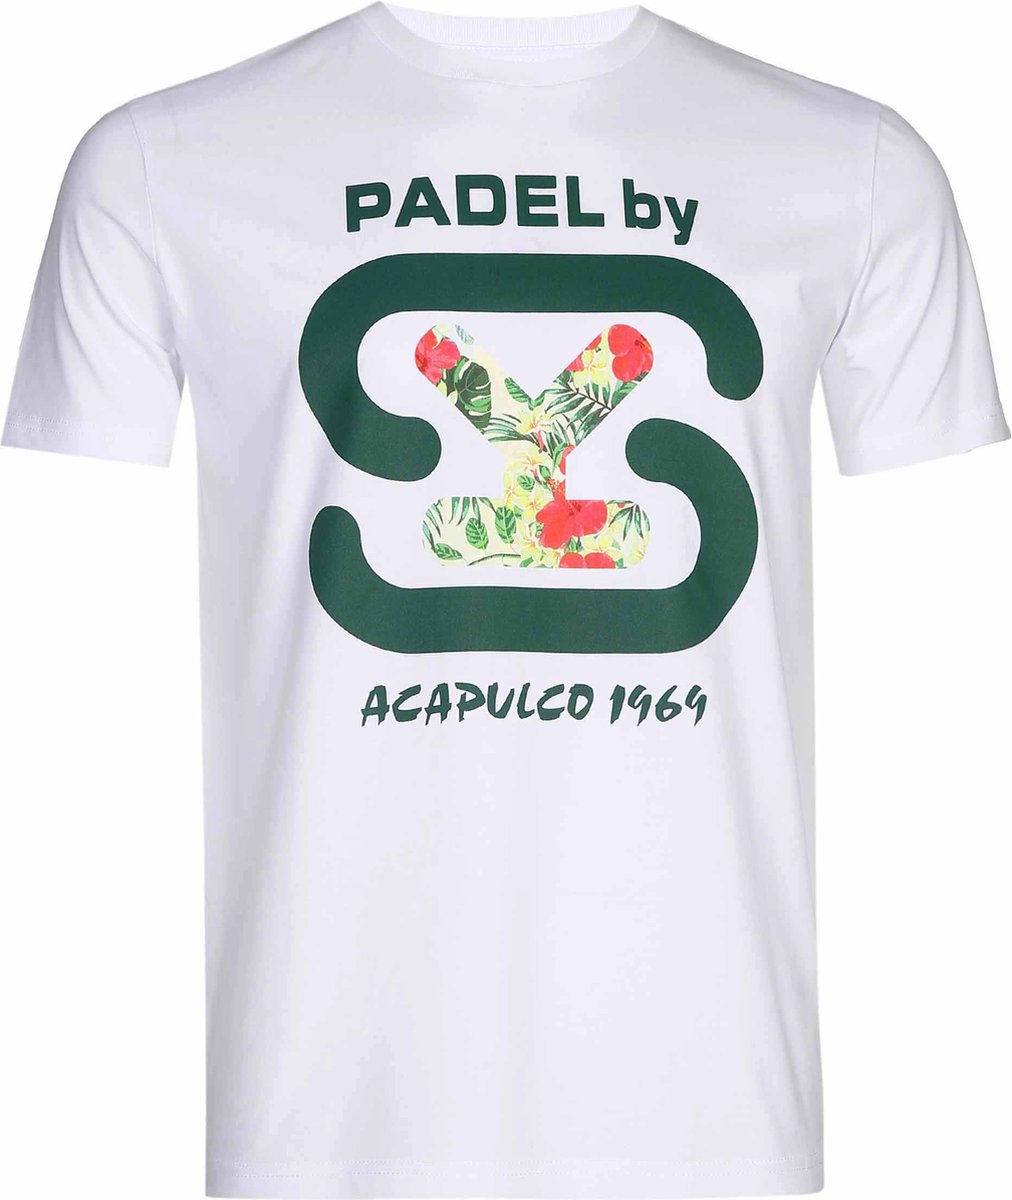 PADELbySY - ACAPULCO 1969 - T-SHIRT MEN'S - WHITE - SIZE M